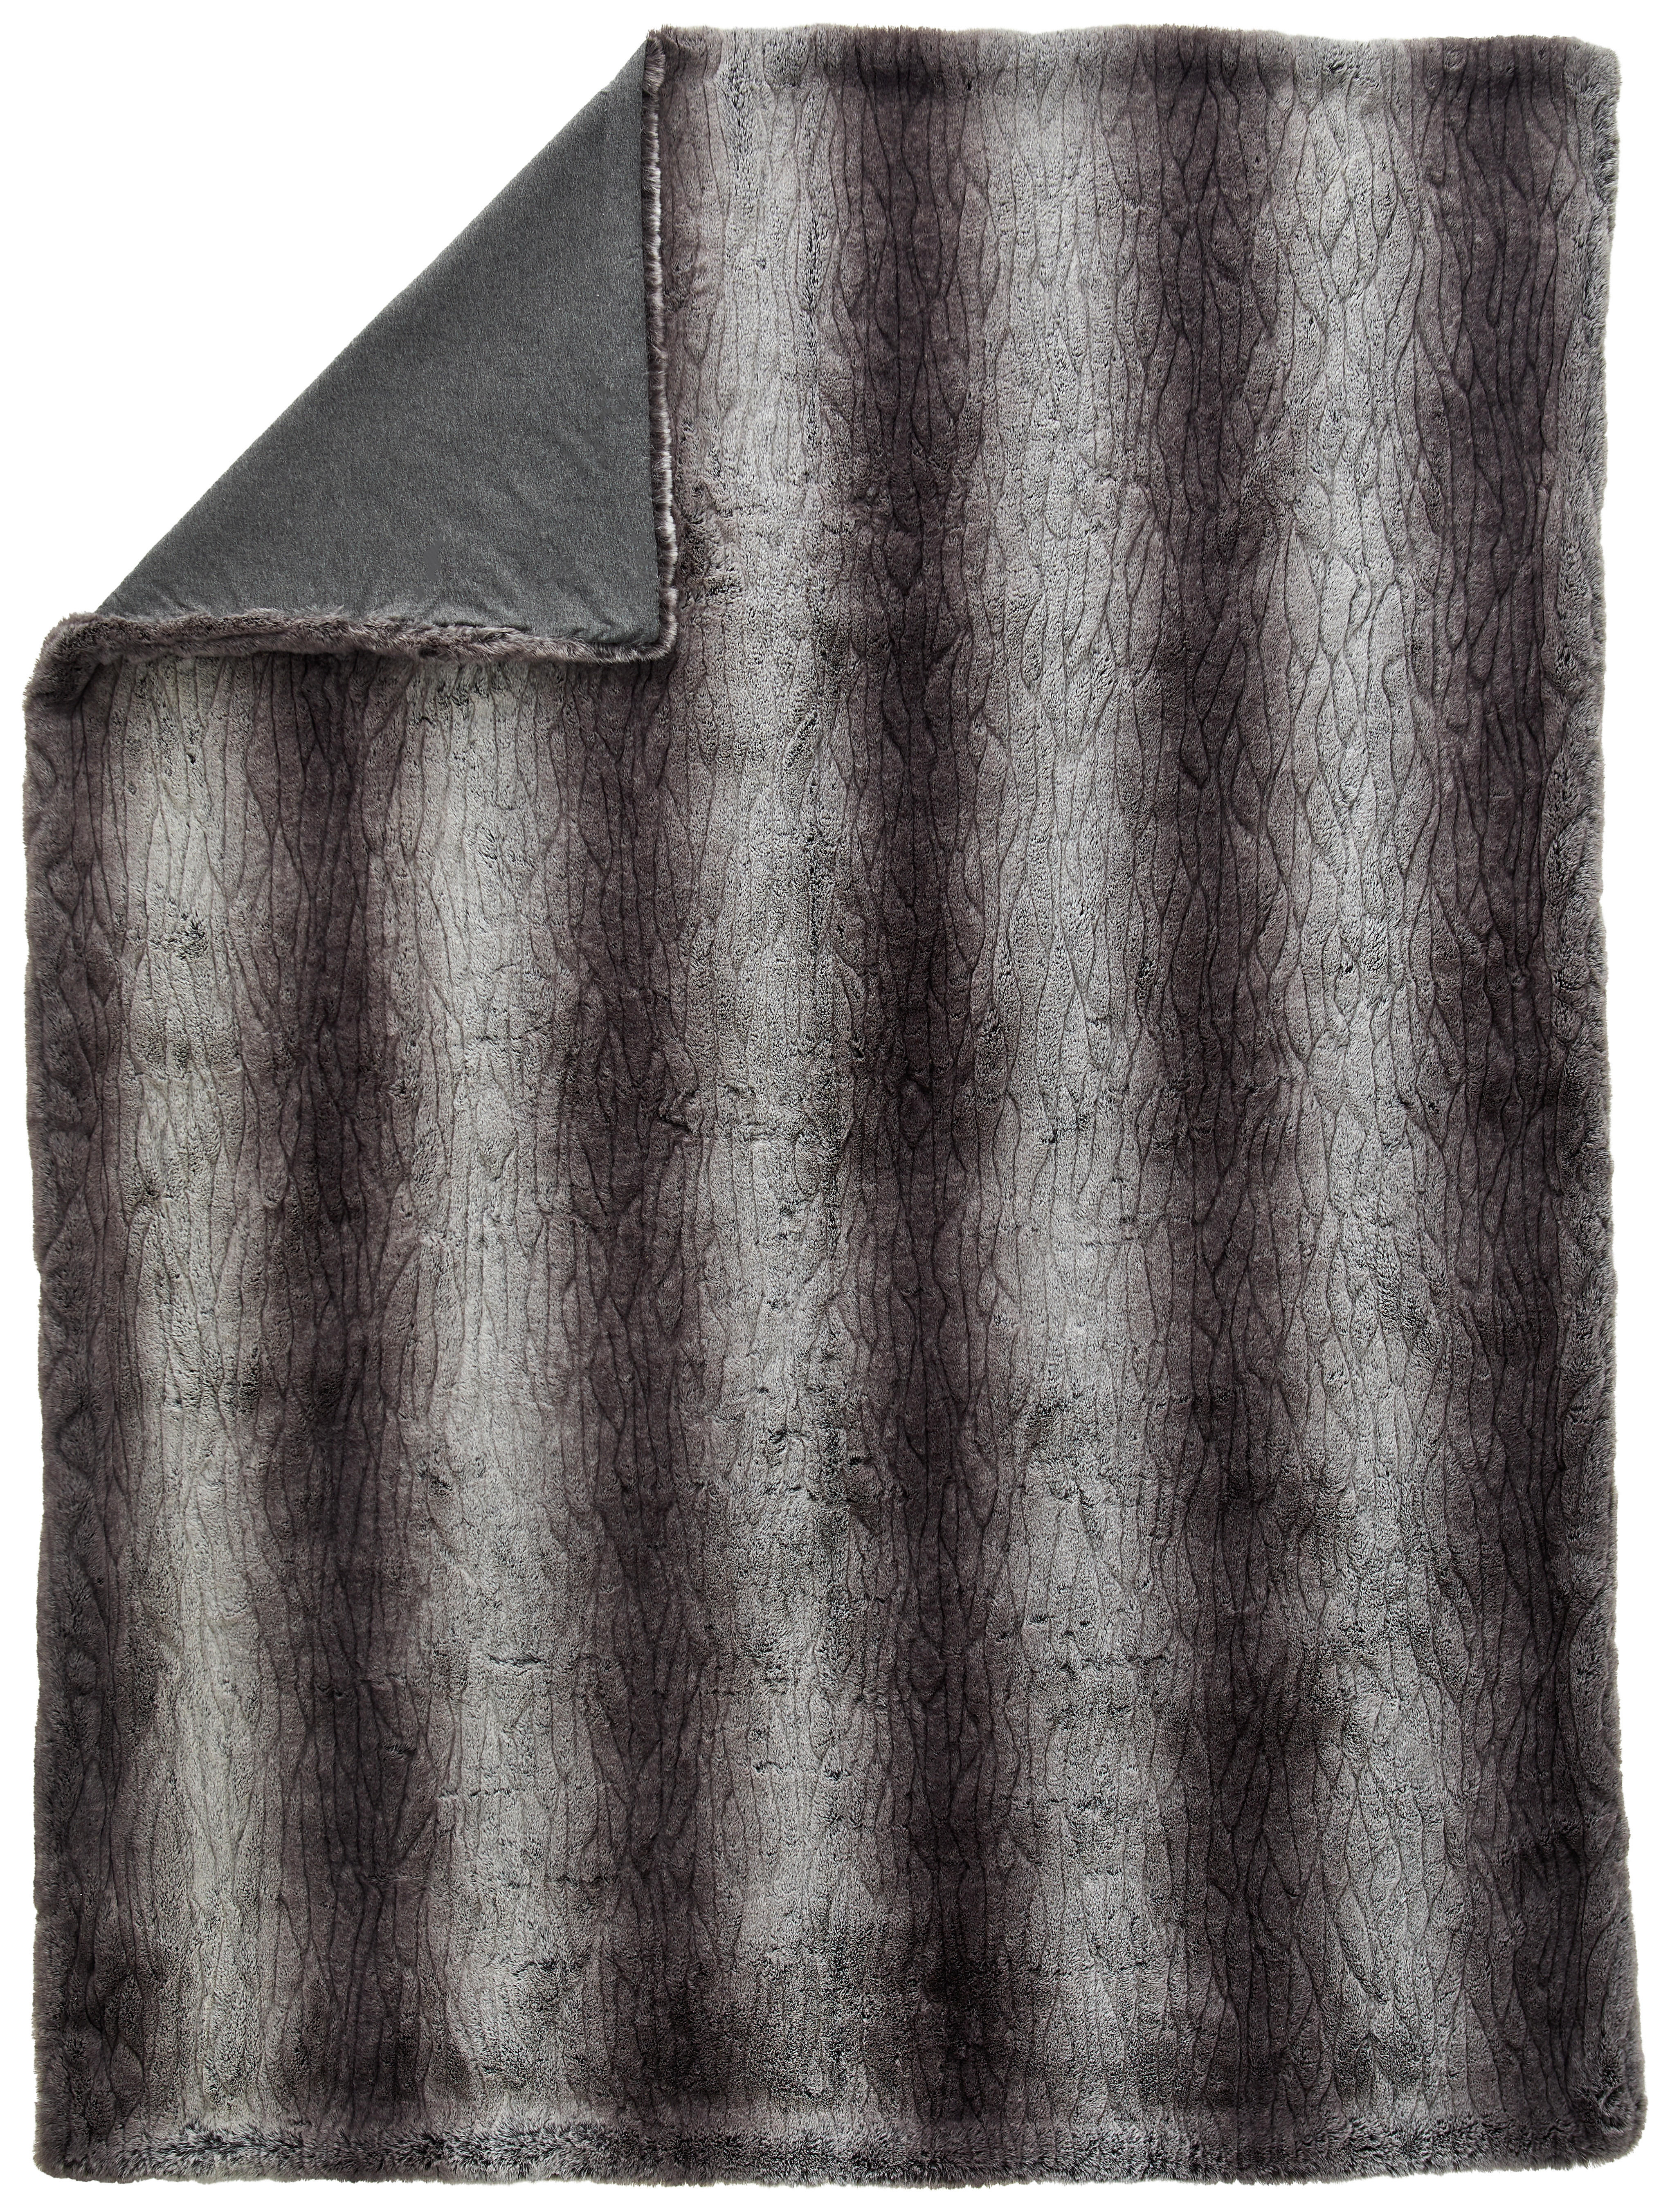 FELLDECKE Reborn Mink 140/190 cm  - Grau, KONVENTIONELL, Textil (140/190cm) - Zoeppritz